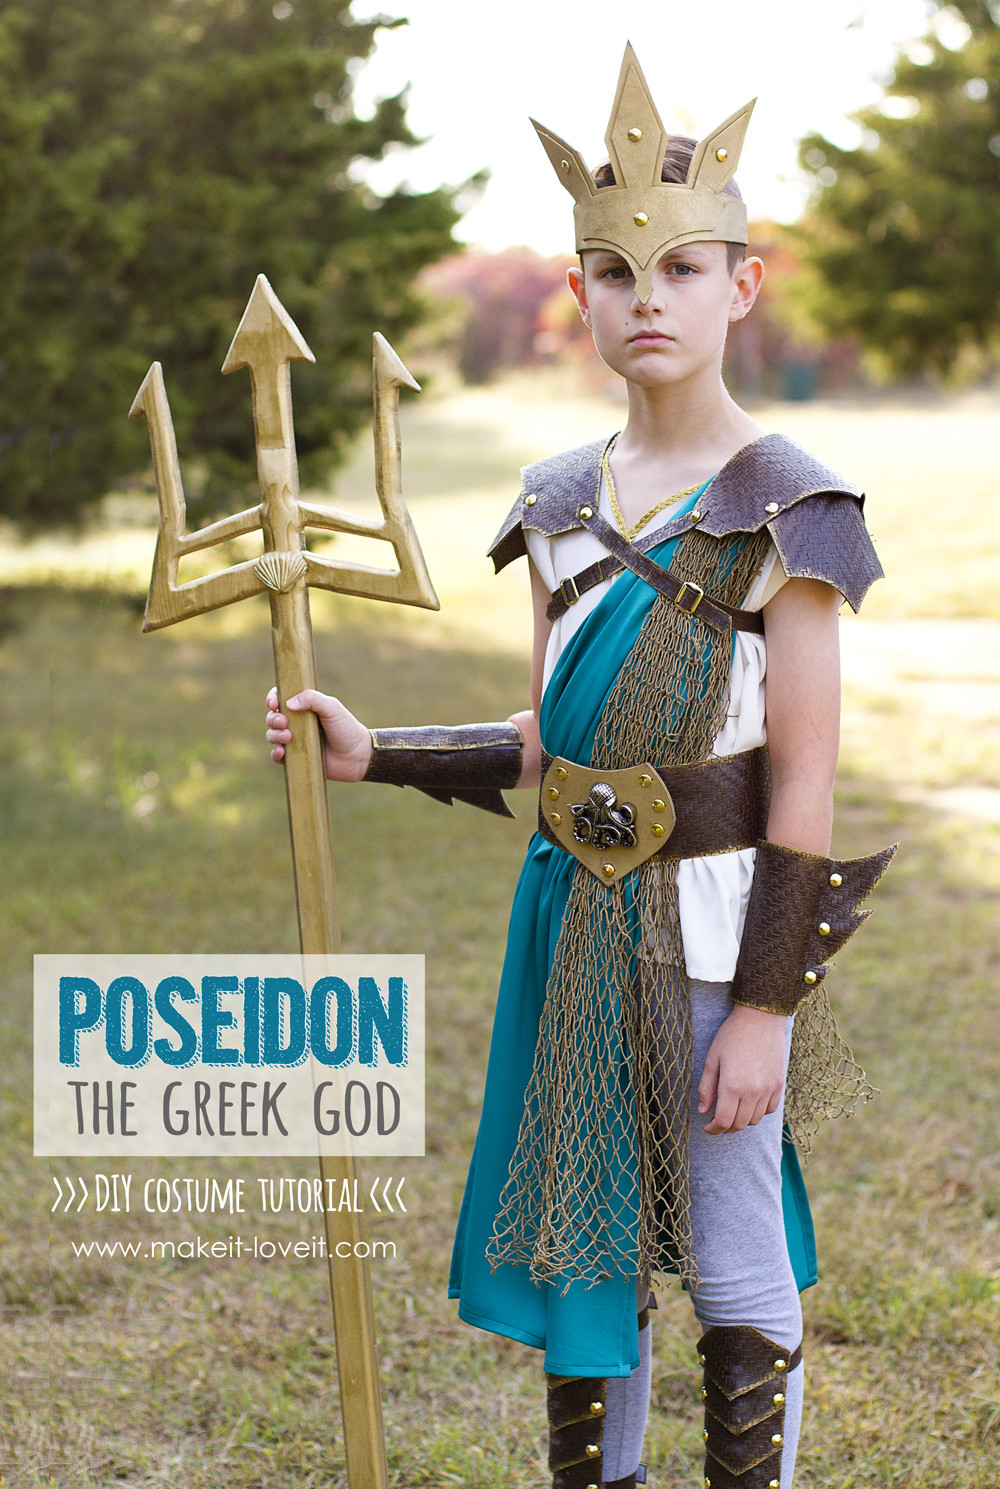 Best ideas about Greek Goddess Costume DIY
. Save or Pin DIY Greek God Costume POSEIDON Now.